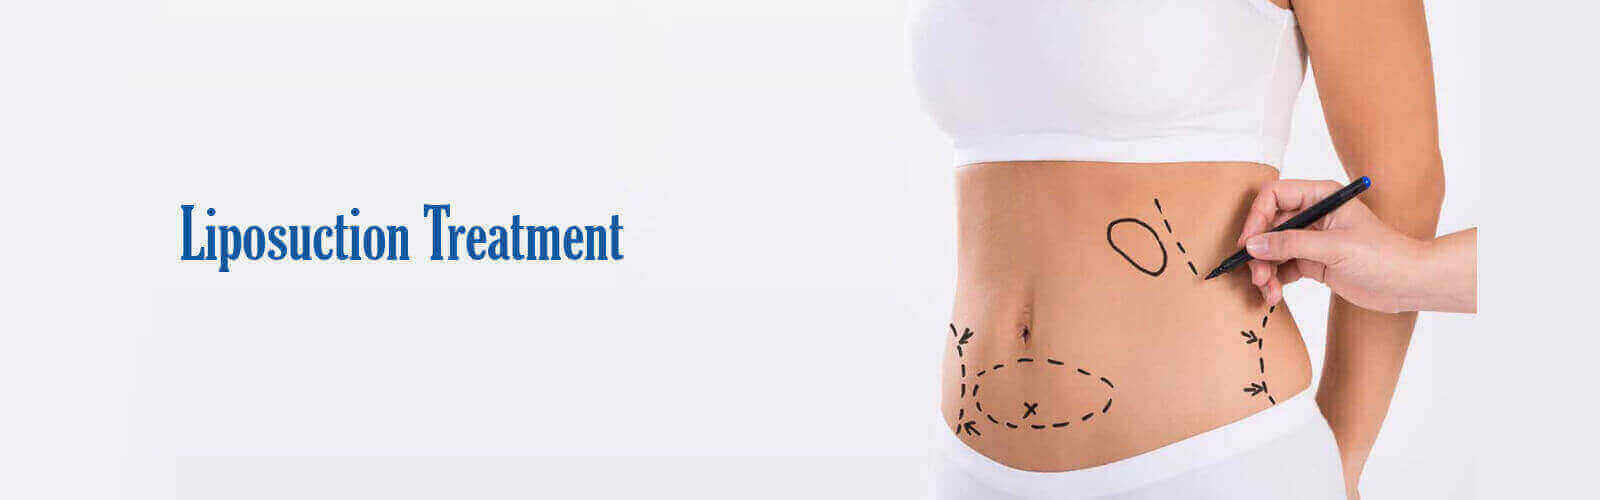 Liposuction Treatment in Leeds